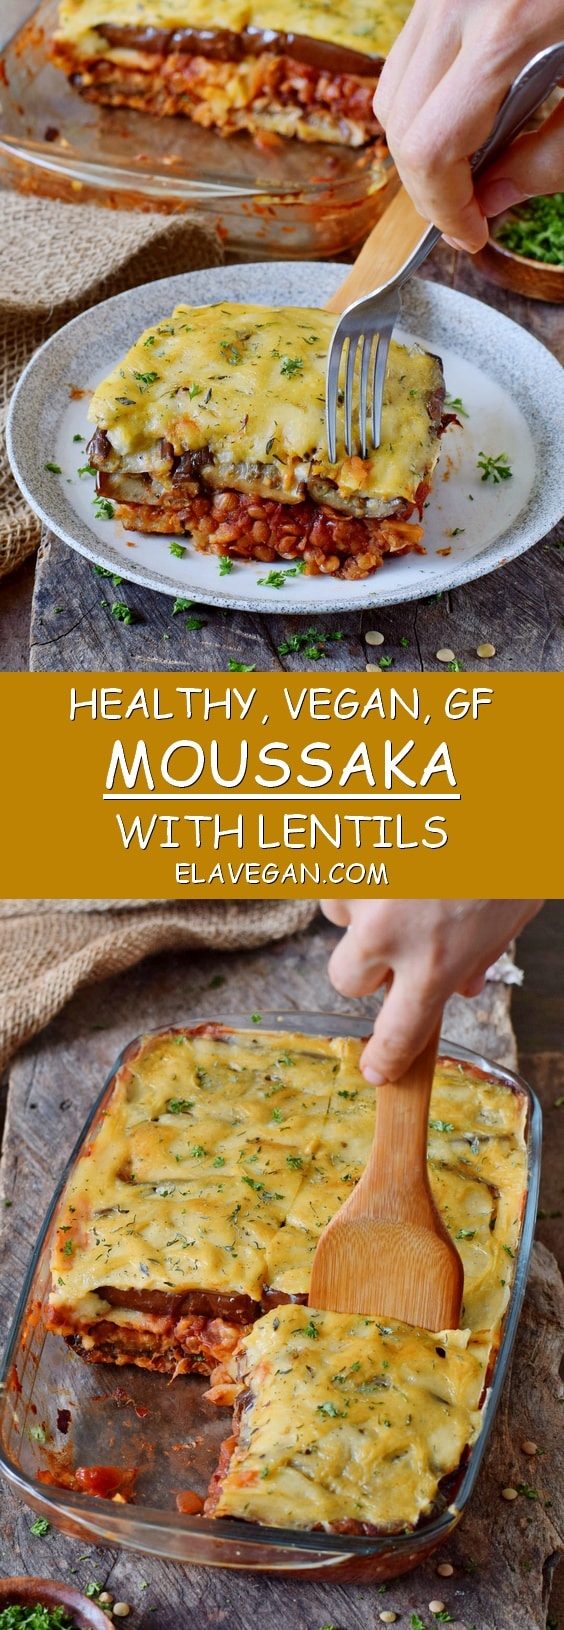 Healthy gluten-free vegan moussaka with lentils